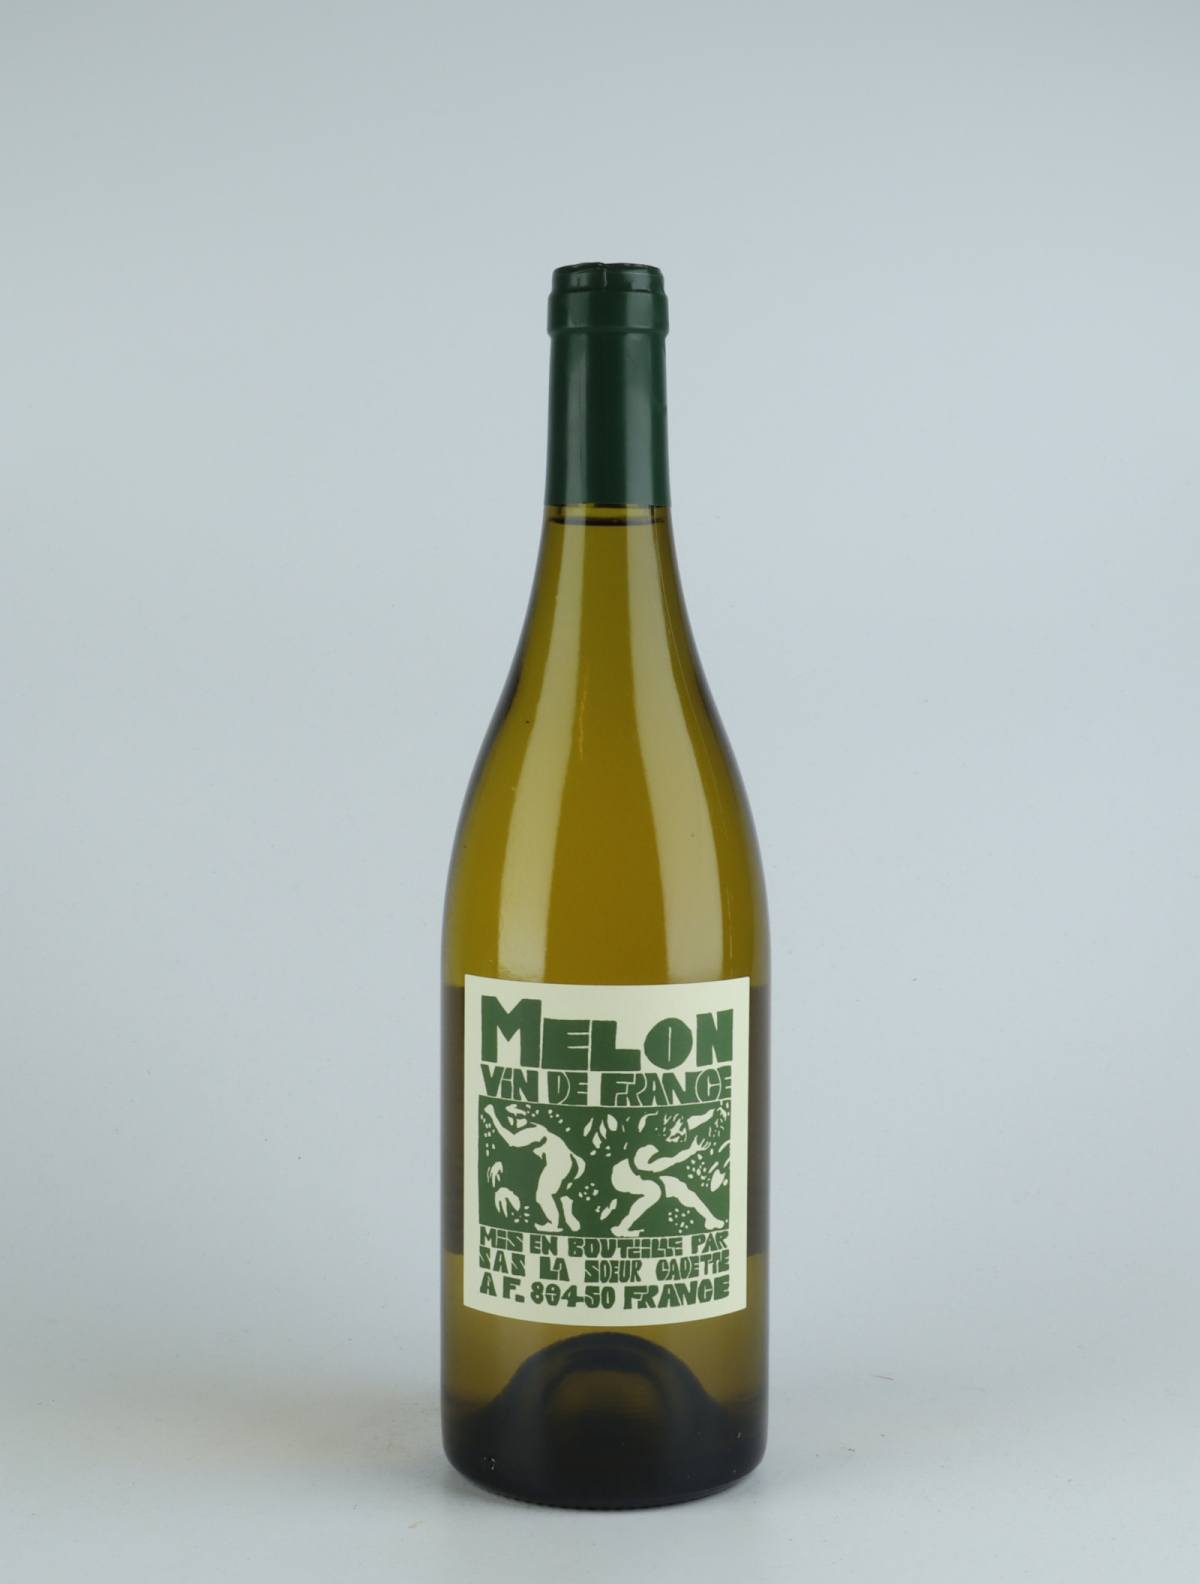 A bottle 2019 Melon White wine from La Sœur Cadette, Burgundy in France